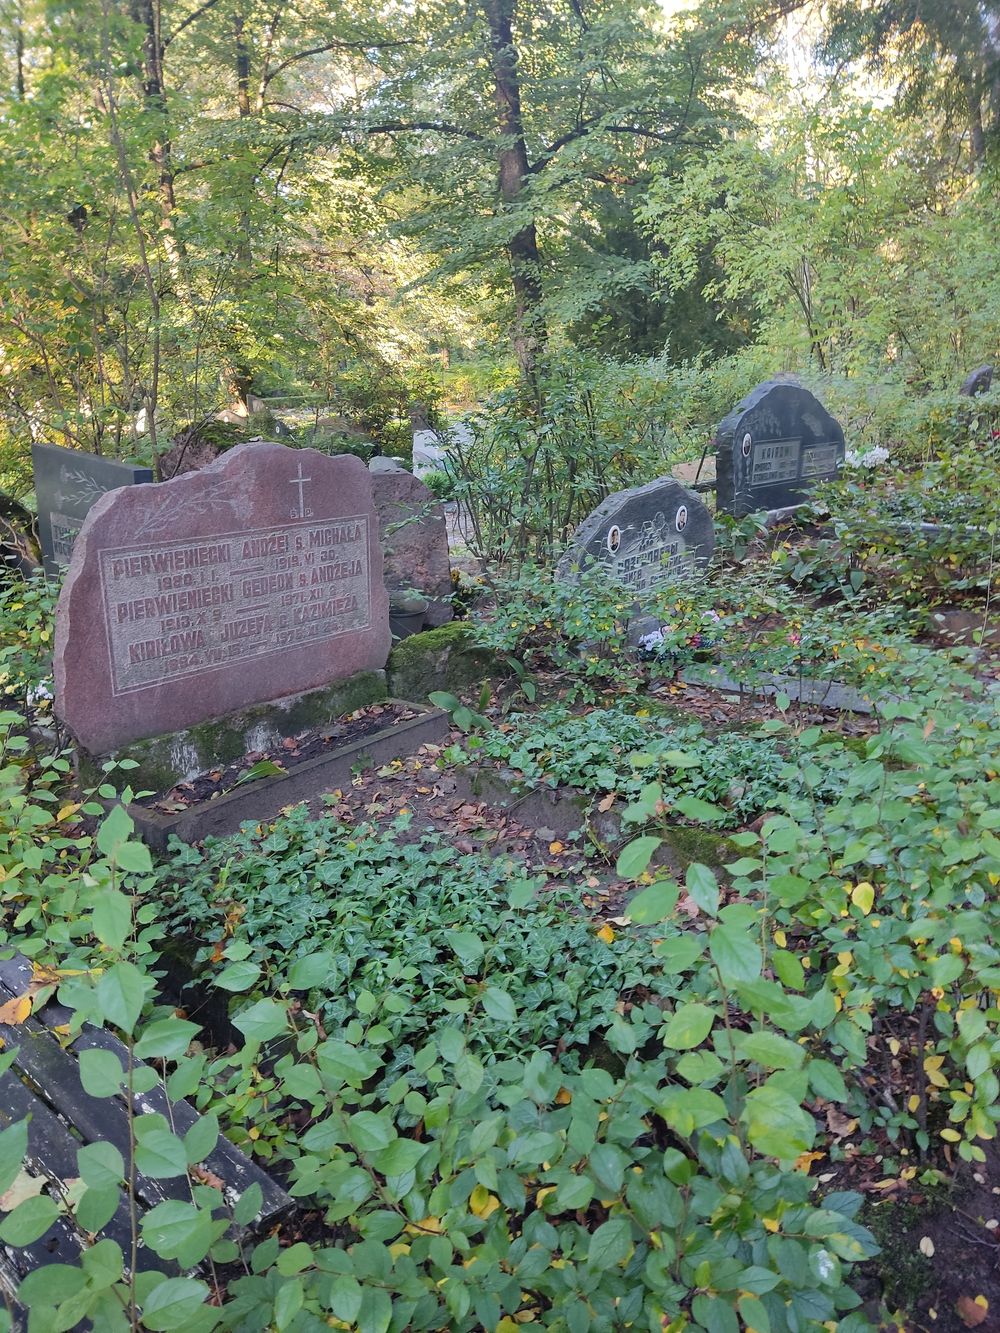 Tombstone of the Piewniecki family